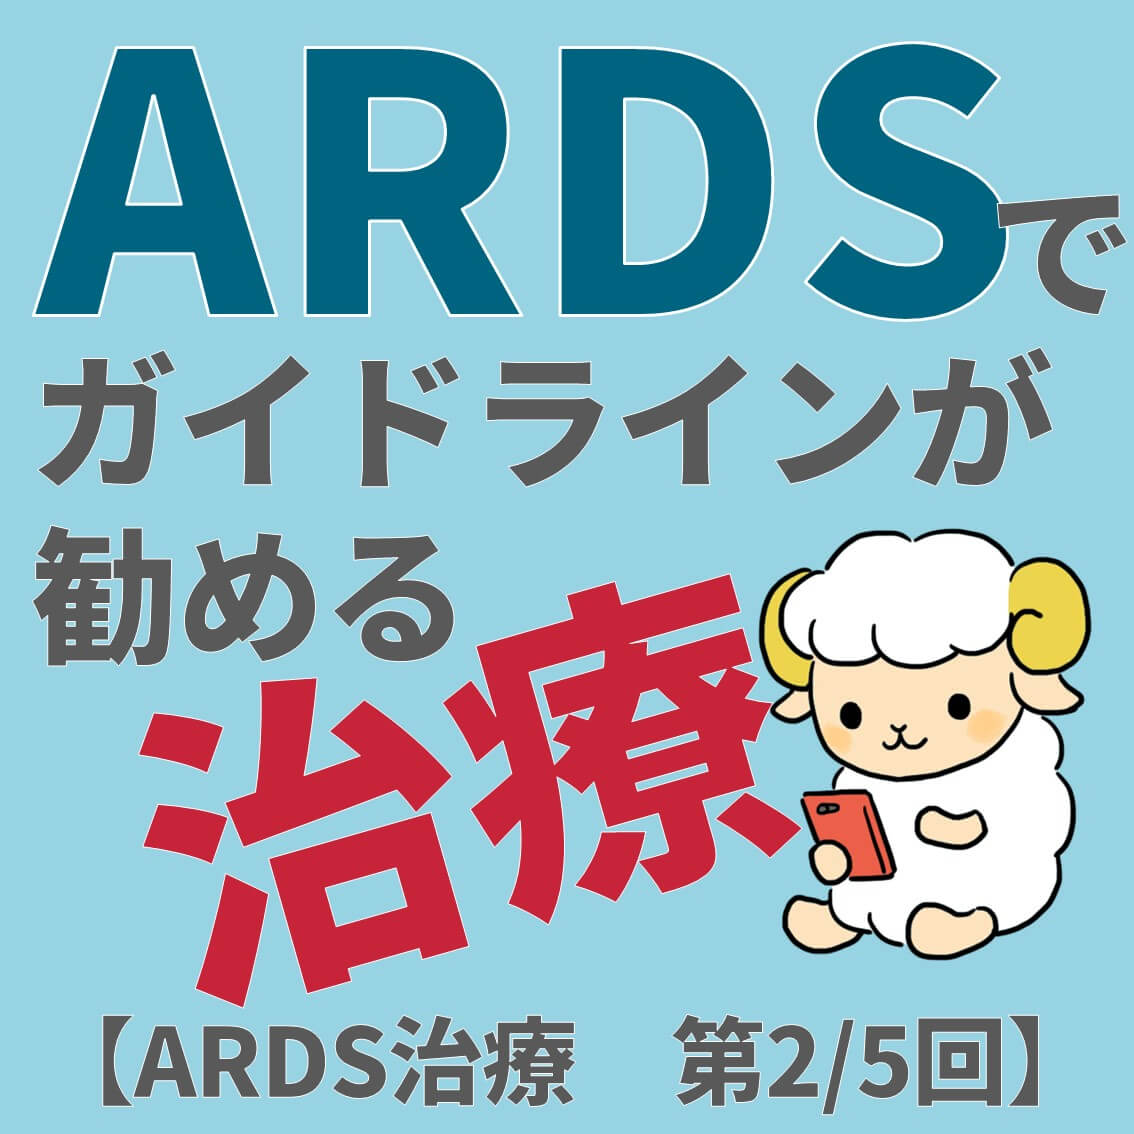 ARDS、ベルリン定義、診断基準、治療